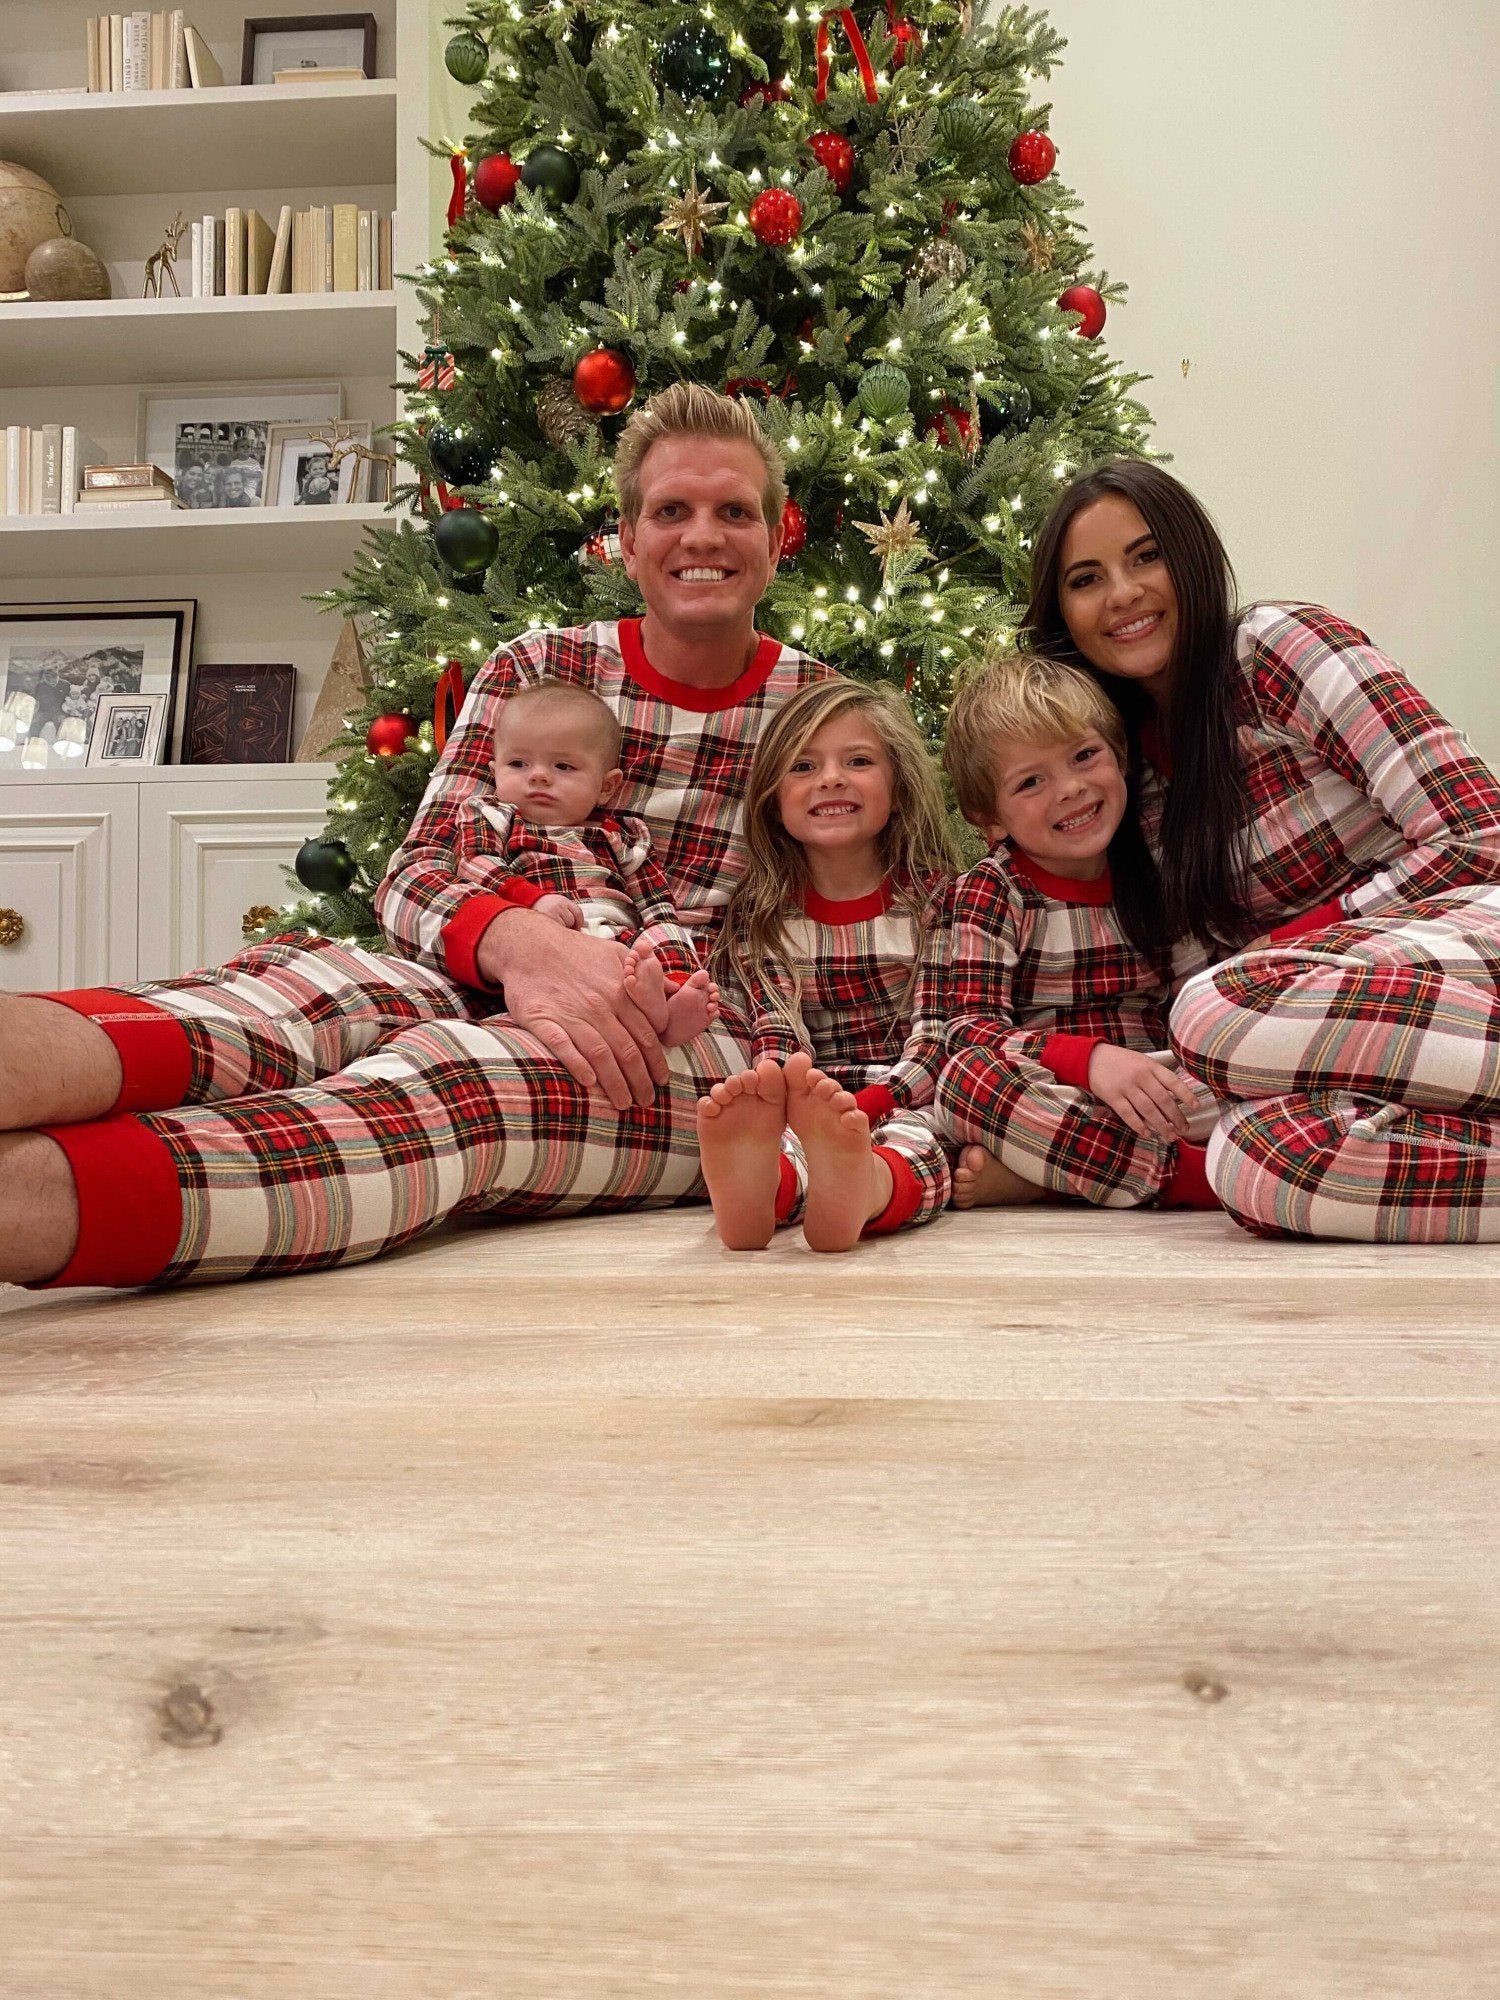 My family has a Christmas Pajamas tradition, so I've waited since